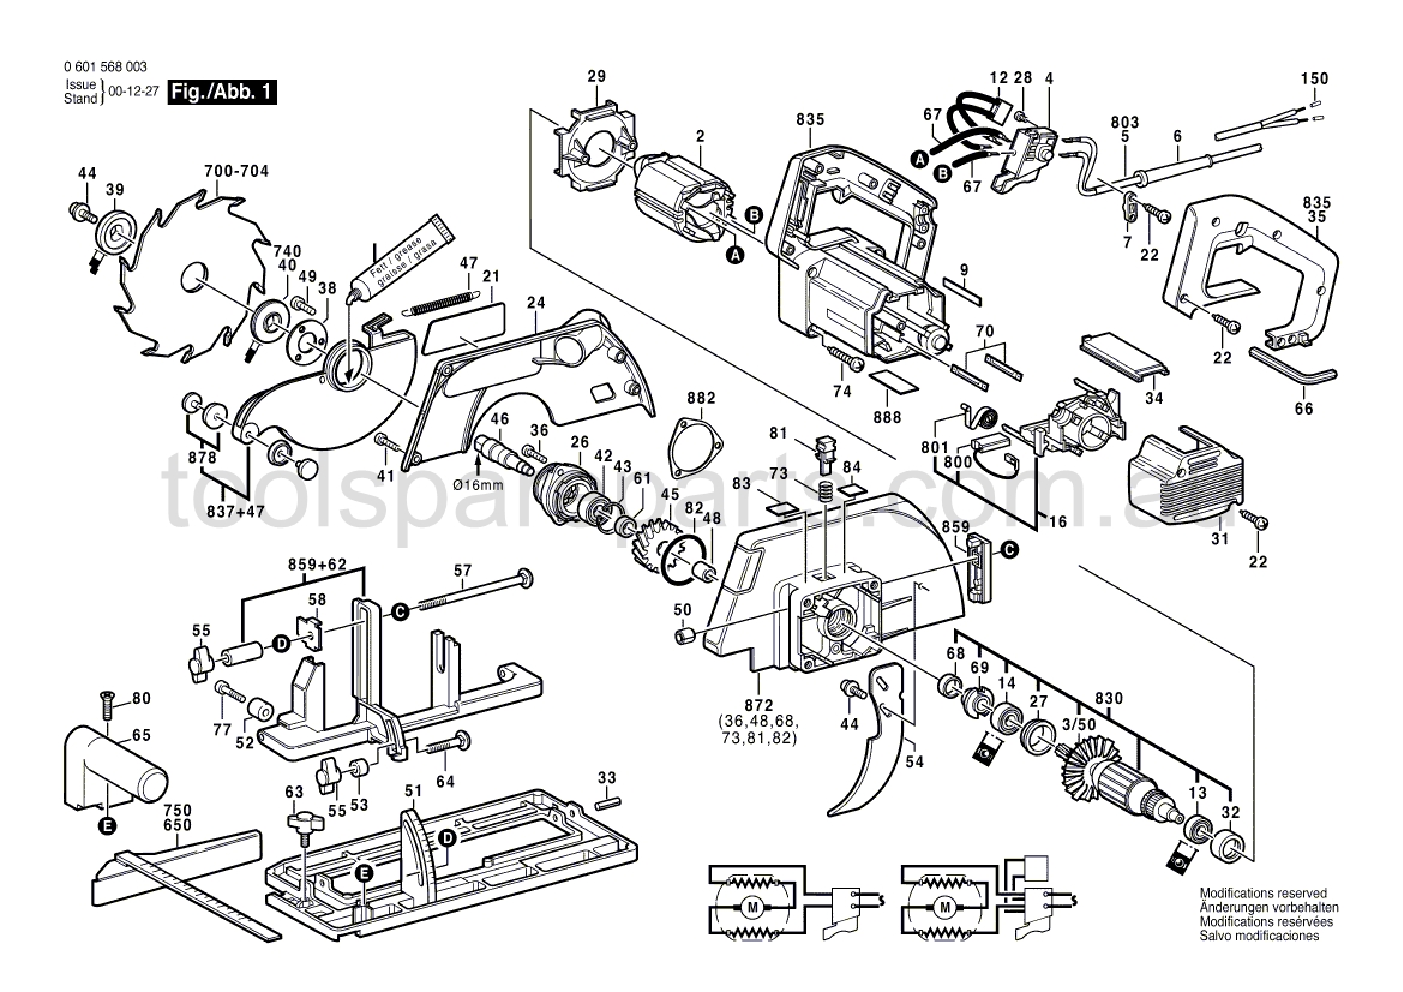 Bosch GKS 65 0601568037  Diagram 1